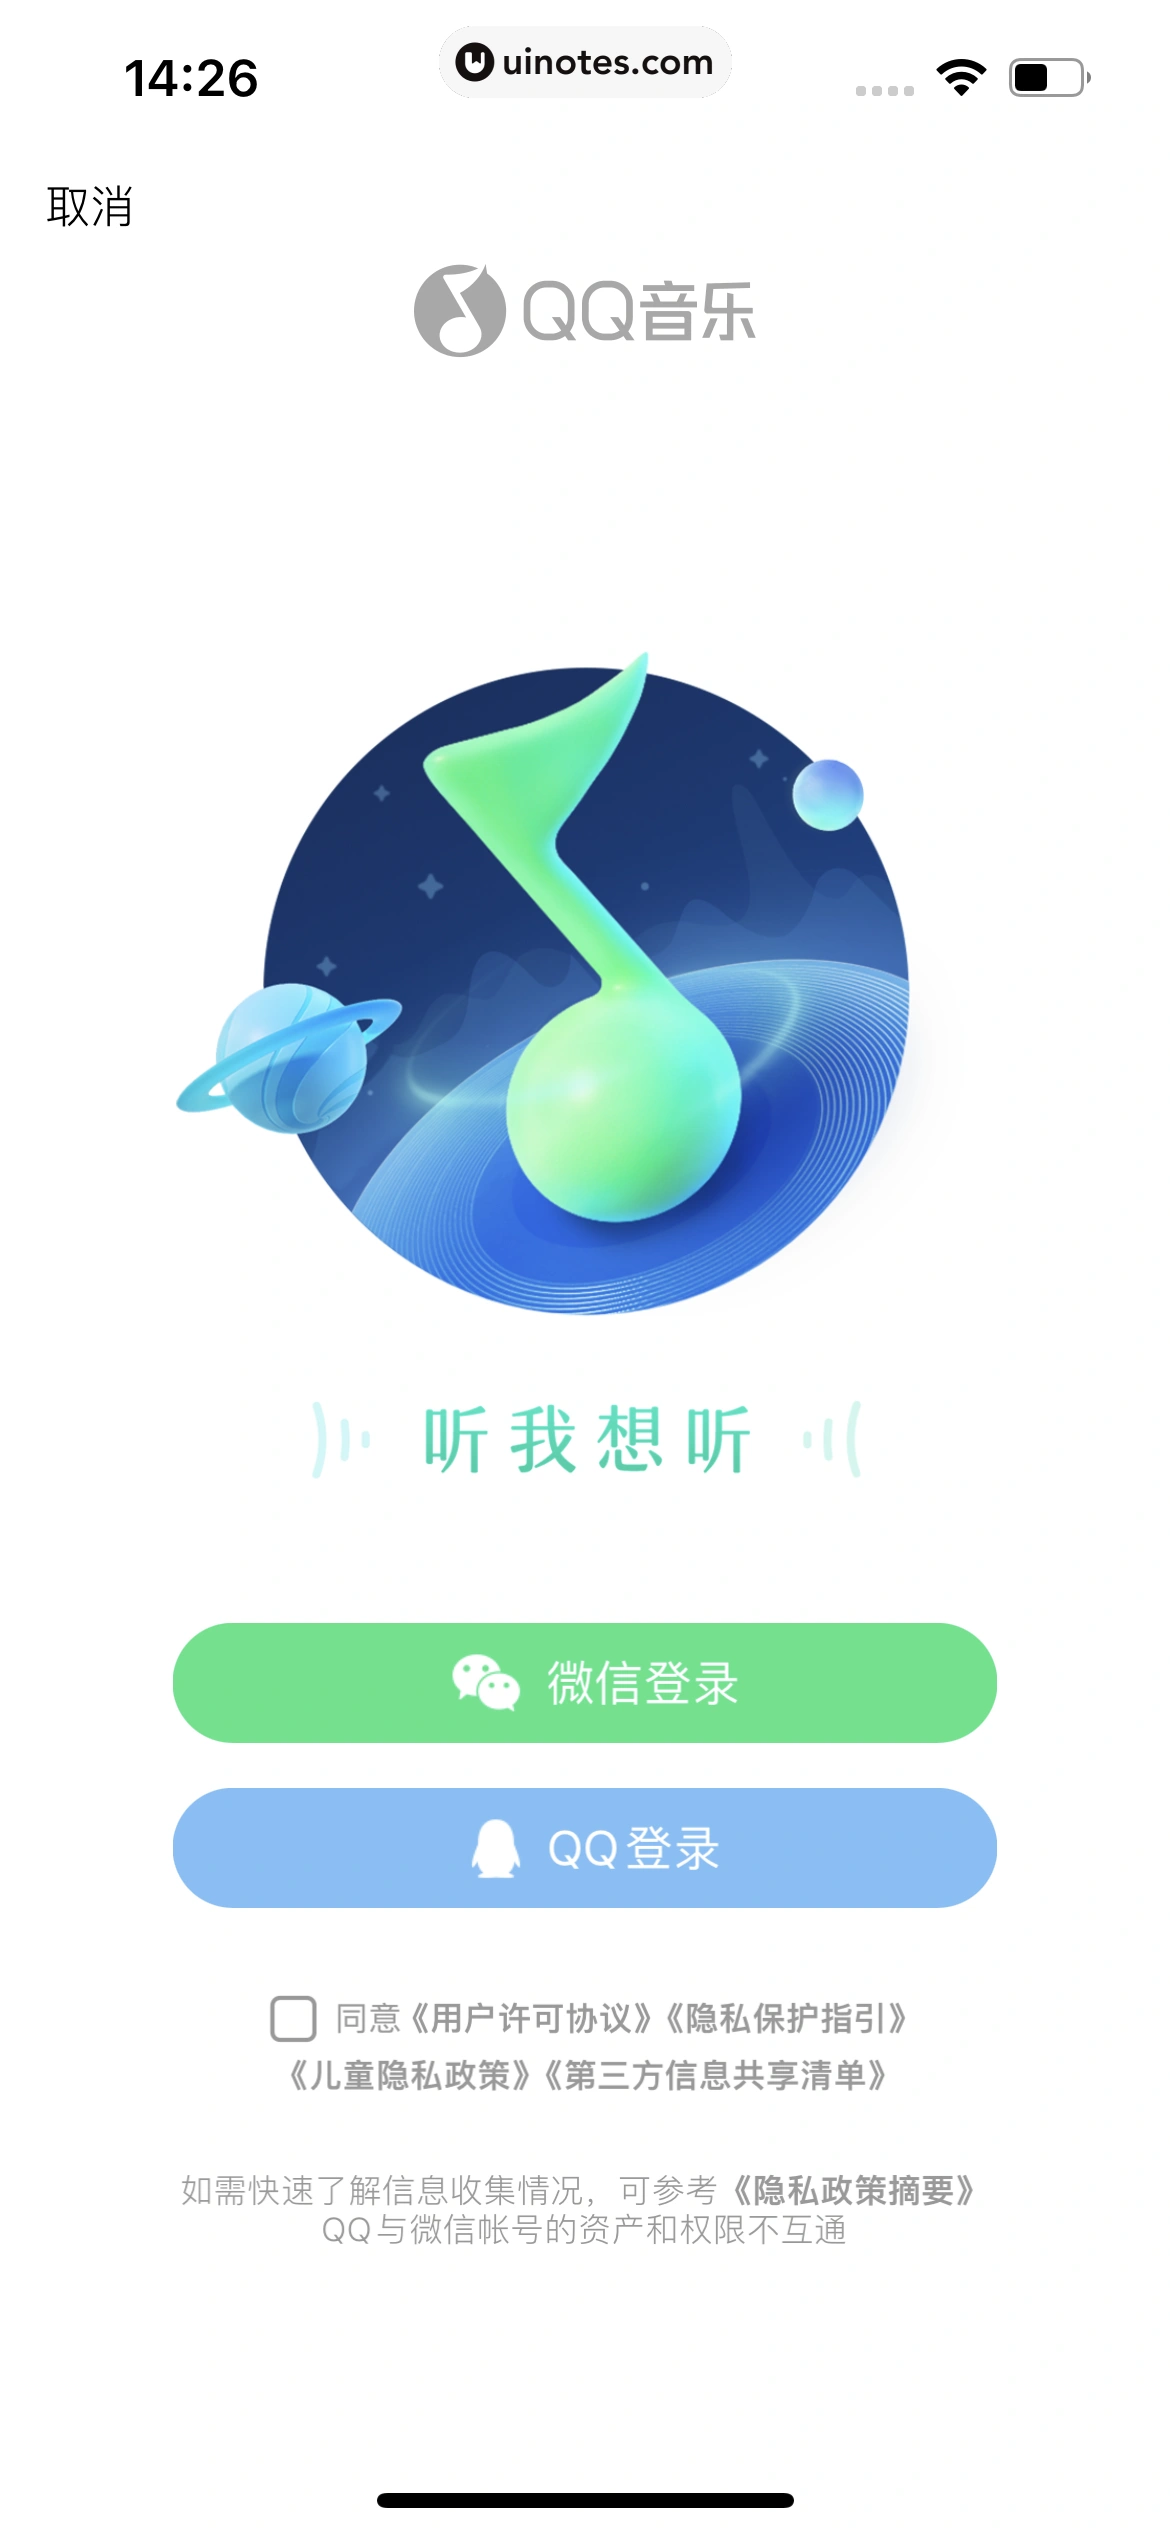 QQ音乐 App 截图 013 - UI Notes